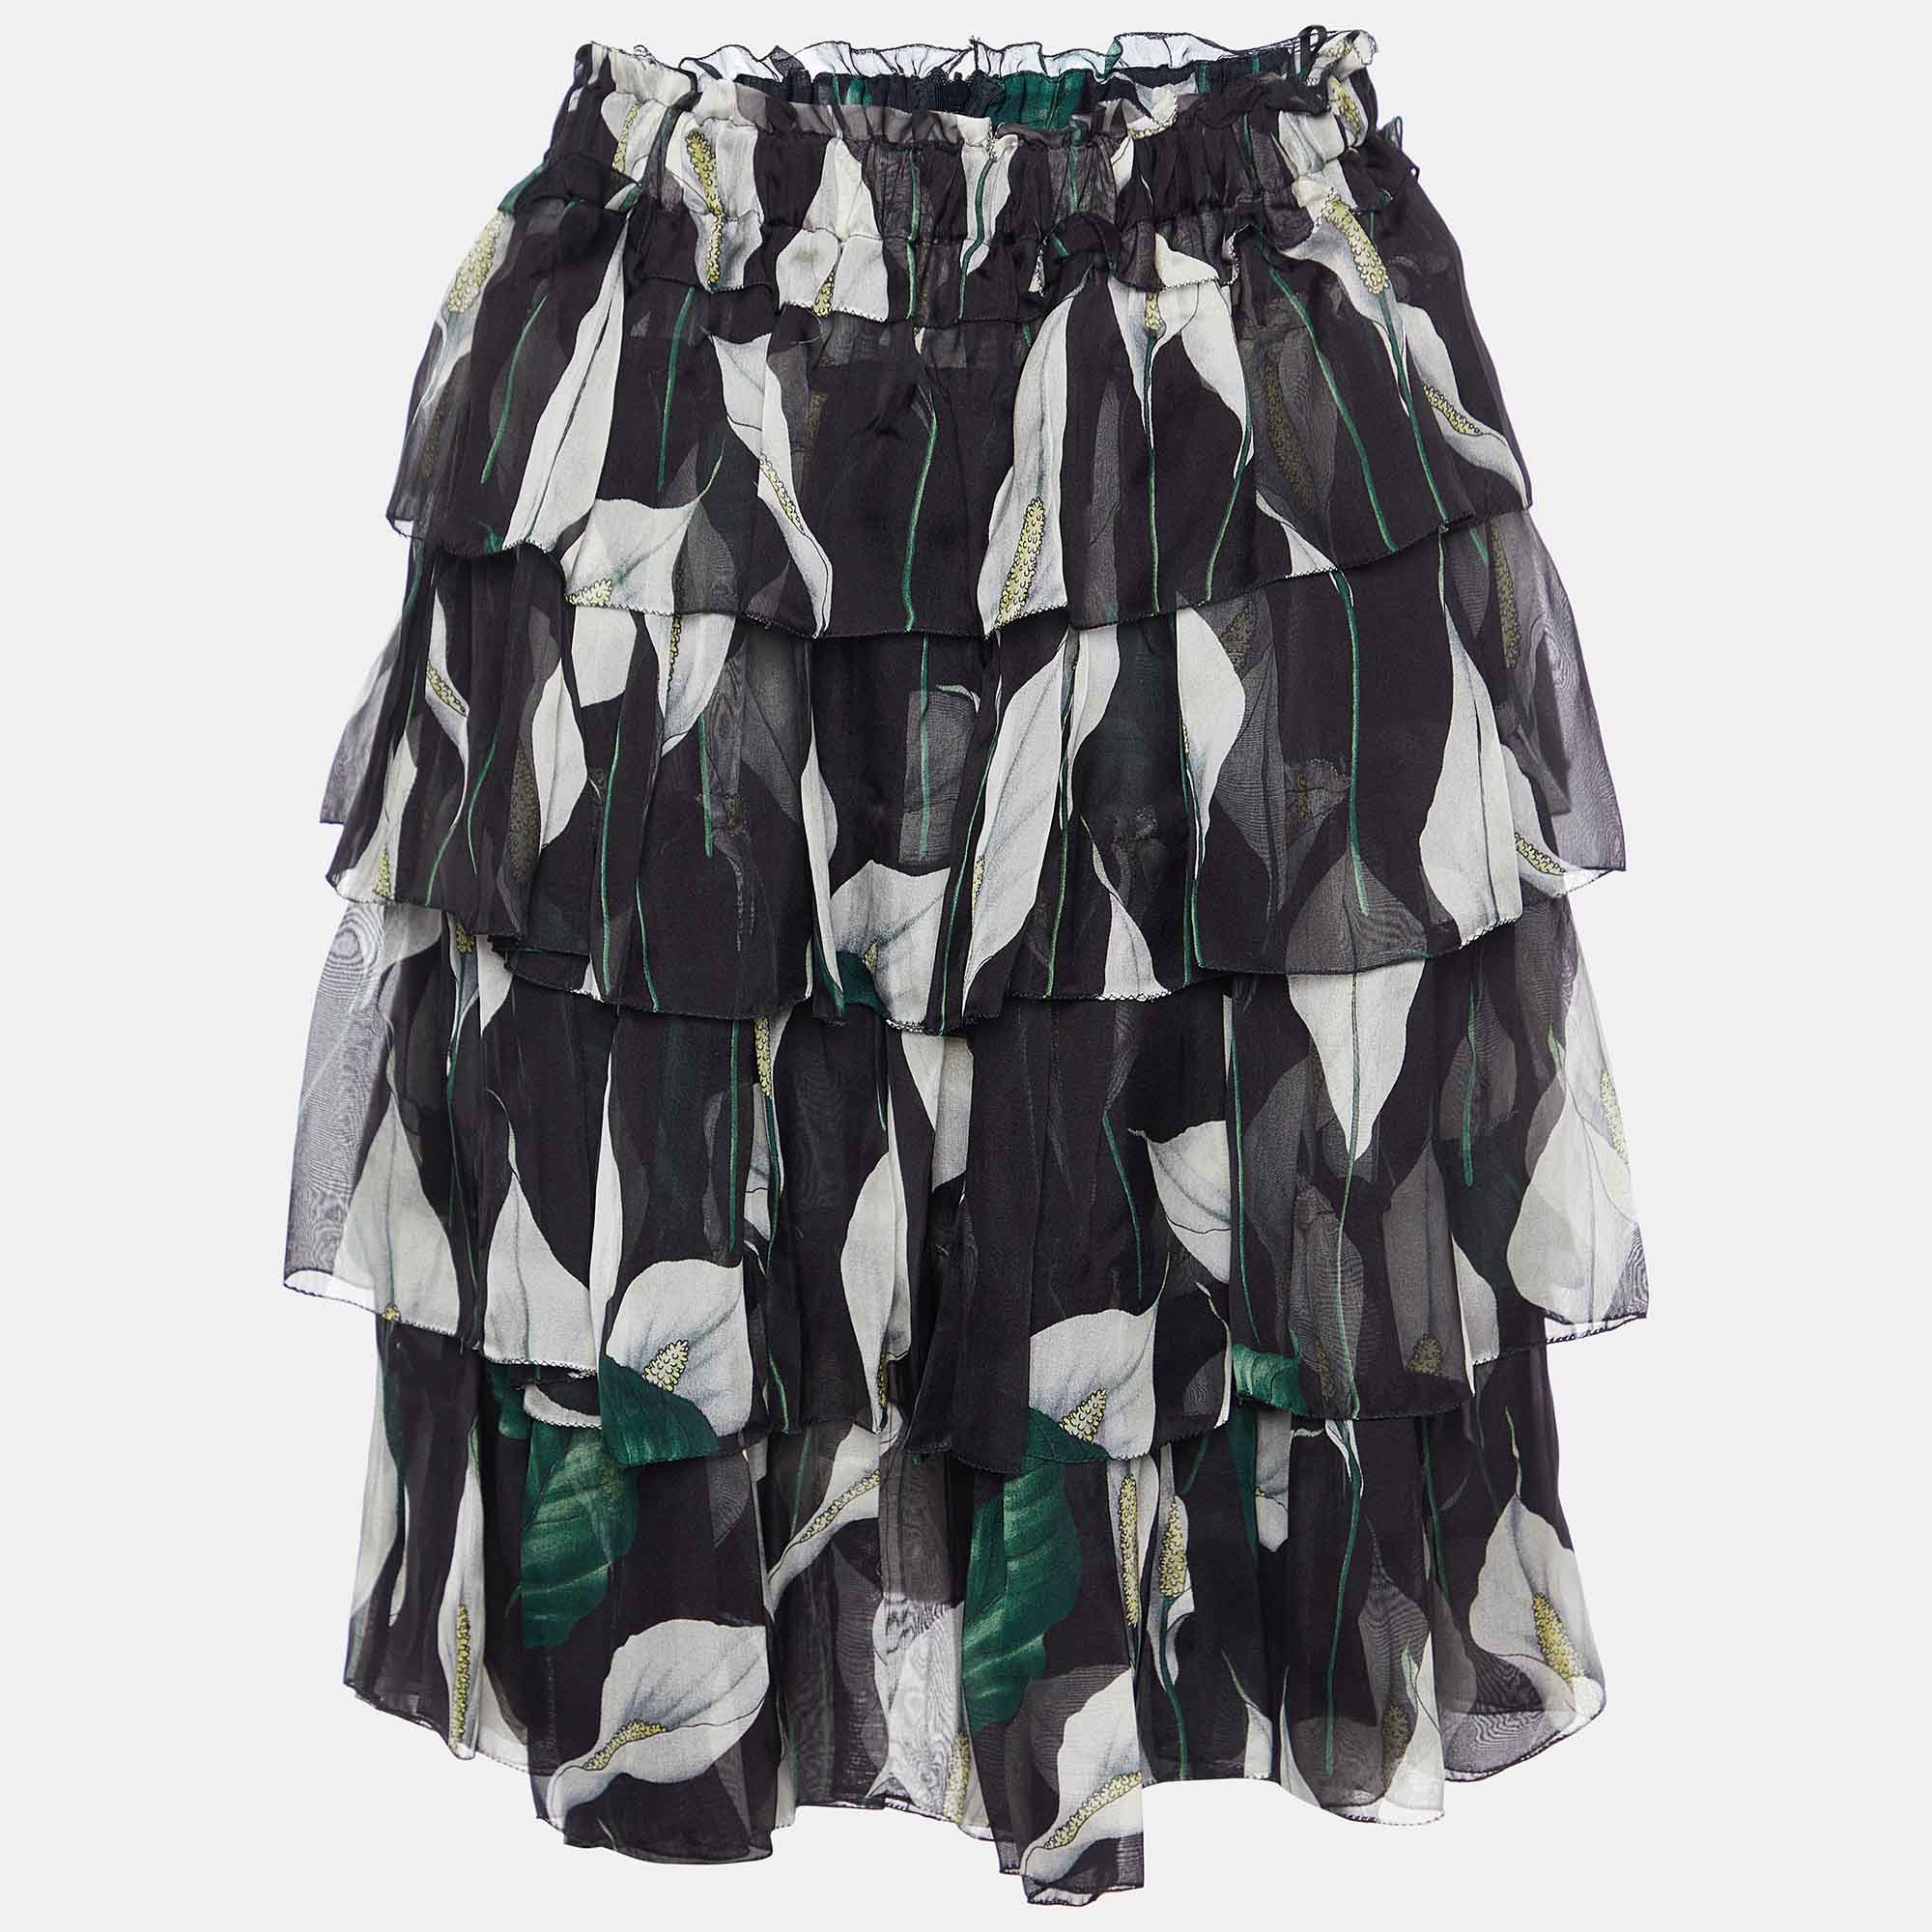 D&g black calla lilly print silk chiffon tiered skirt s